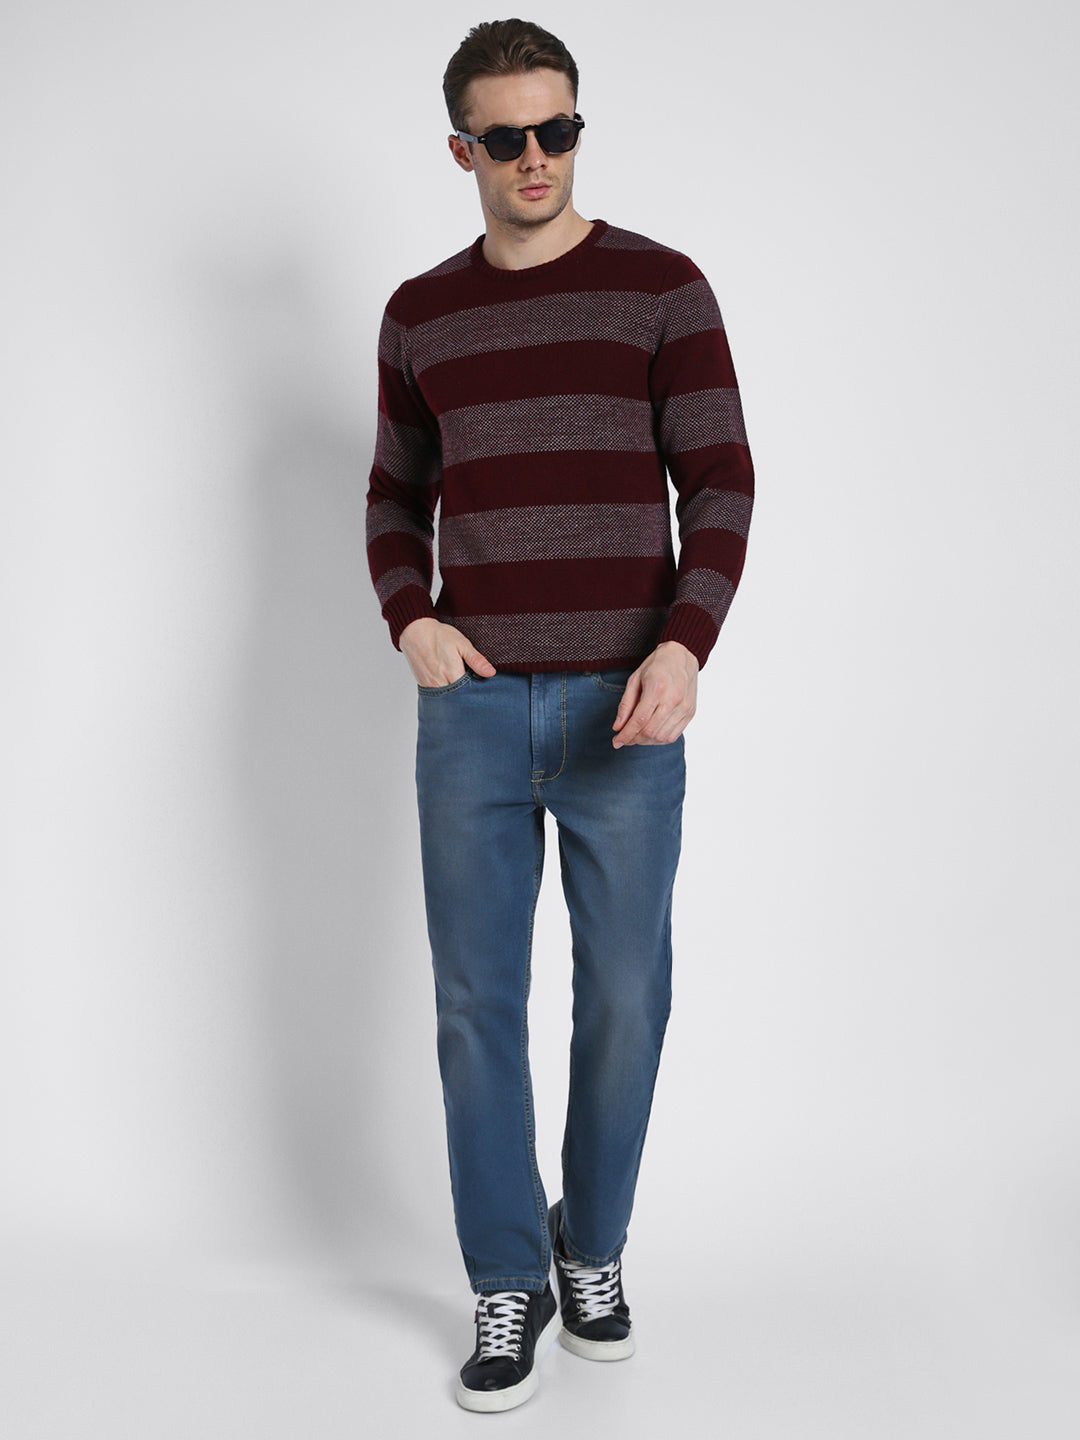 Dennis Lingo Men's Maroon Striper Full Sleeves Pullover Sweater